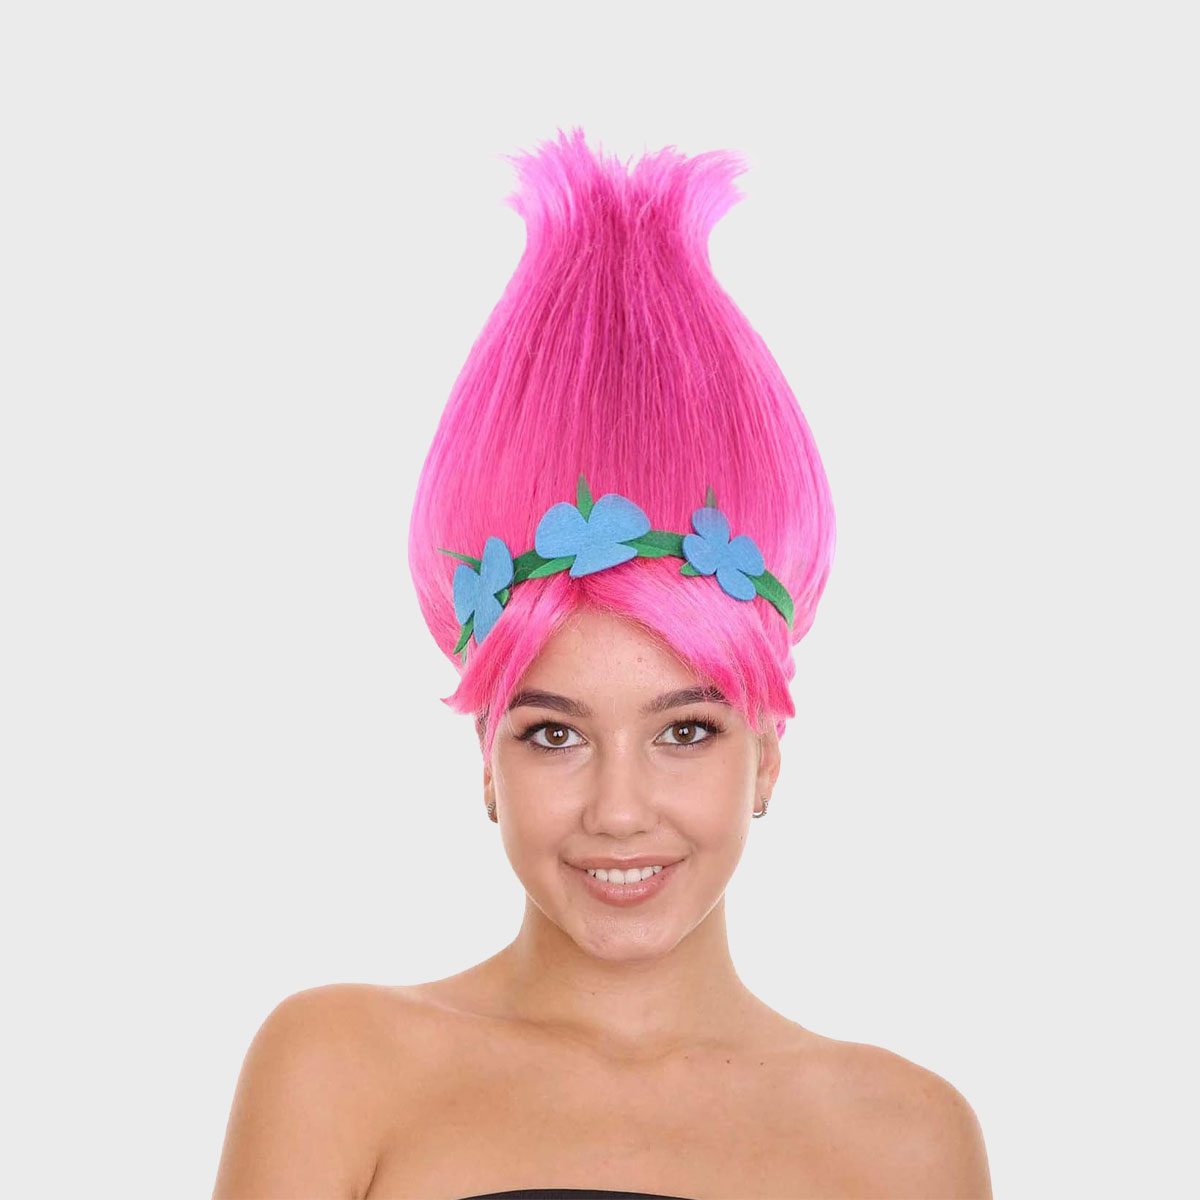 Hpo Colorful Pointy Princess Troll Cosplay Costume Wig Ecomm Via Amazon.com